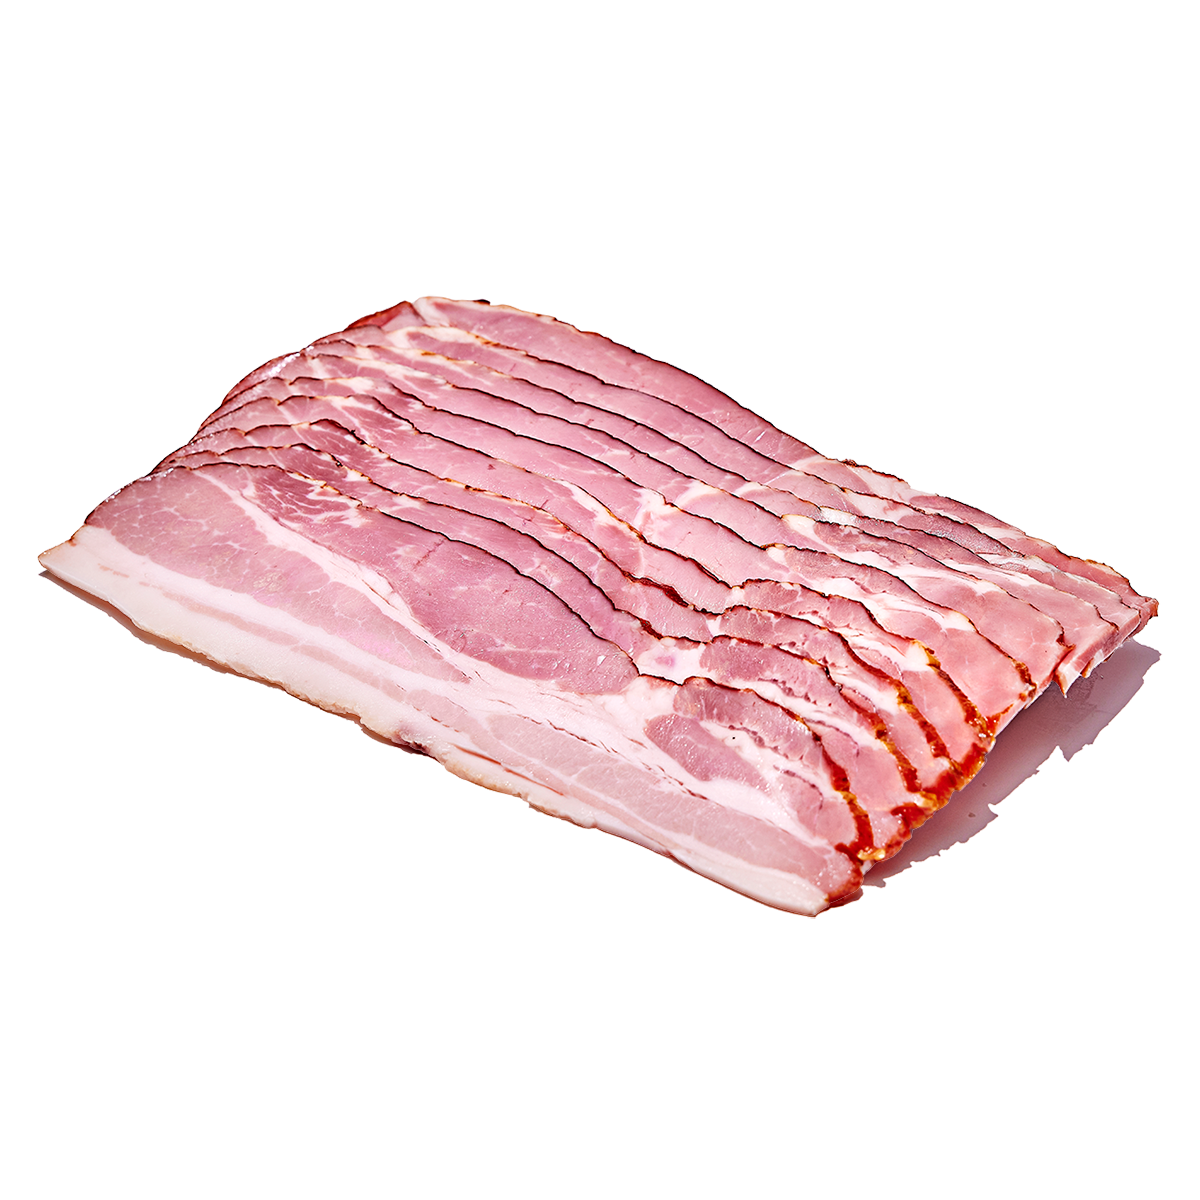 kaisserfleisch, streaky bacon, belly bacon, bacon royalty, emperors bacon, charcuterie, naturally smoked, gluten free